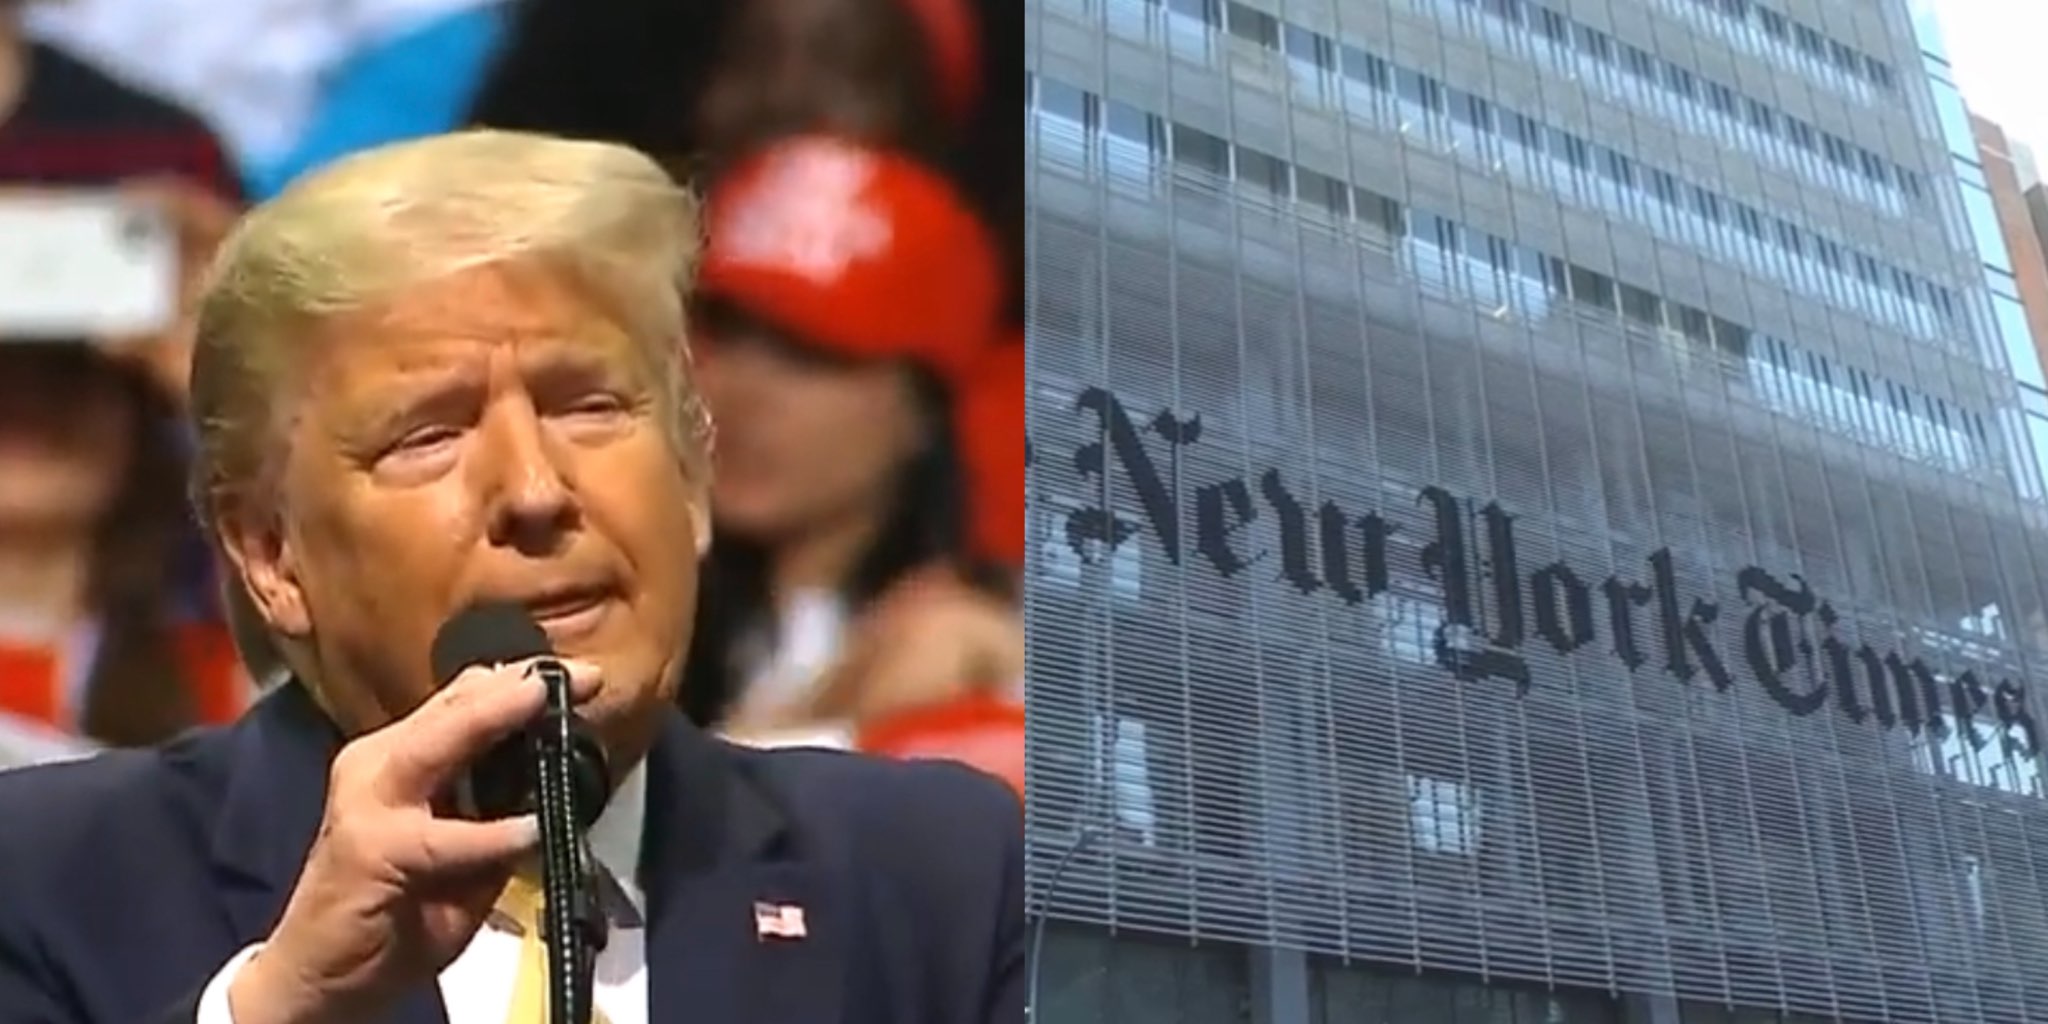 Trump Campaign Sues New York Times For Millions Over Libel Regarding Russian Conspiracies 